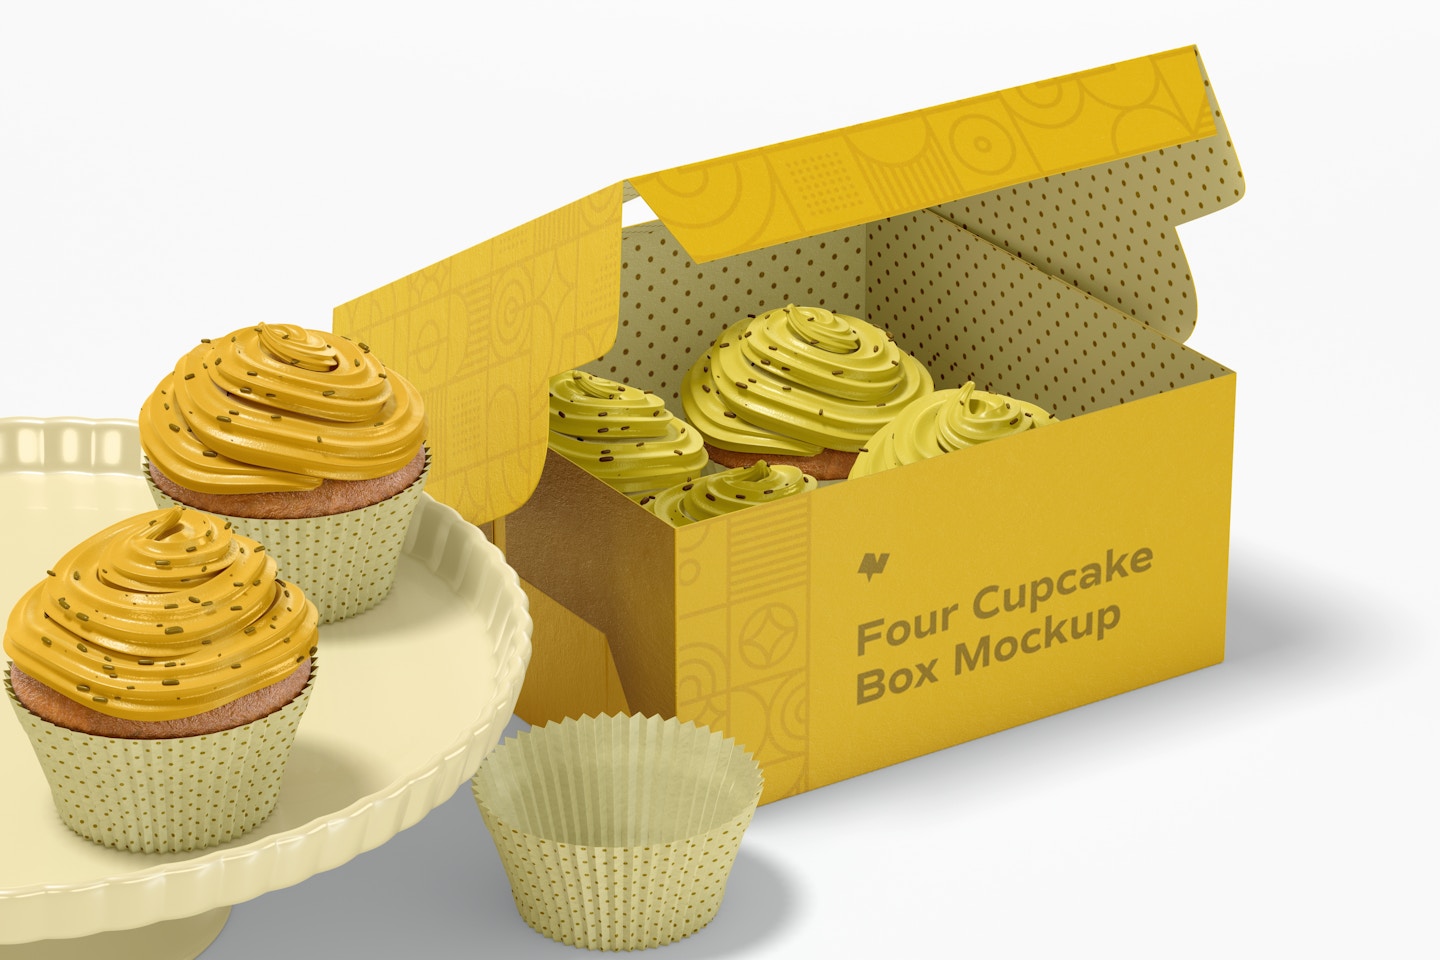 Four Cupcakes Box Mockup